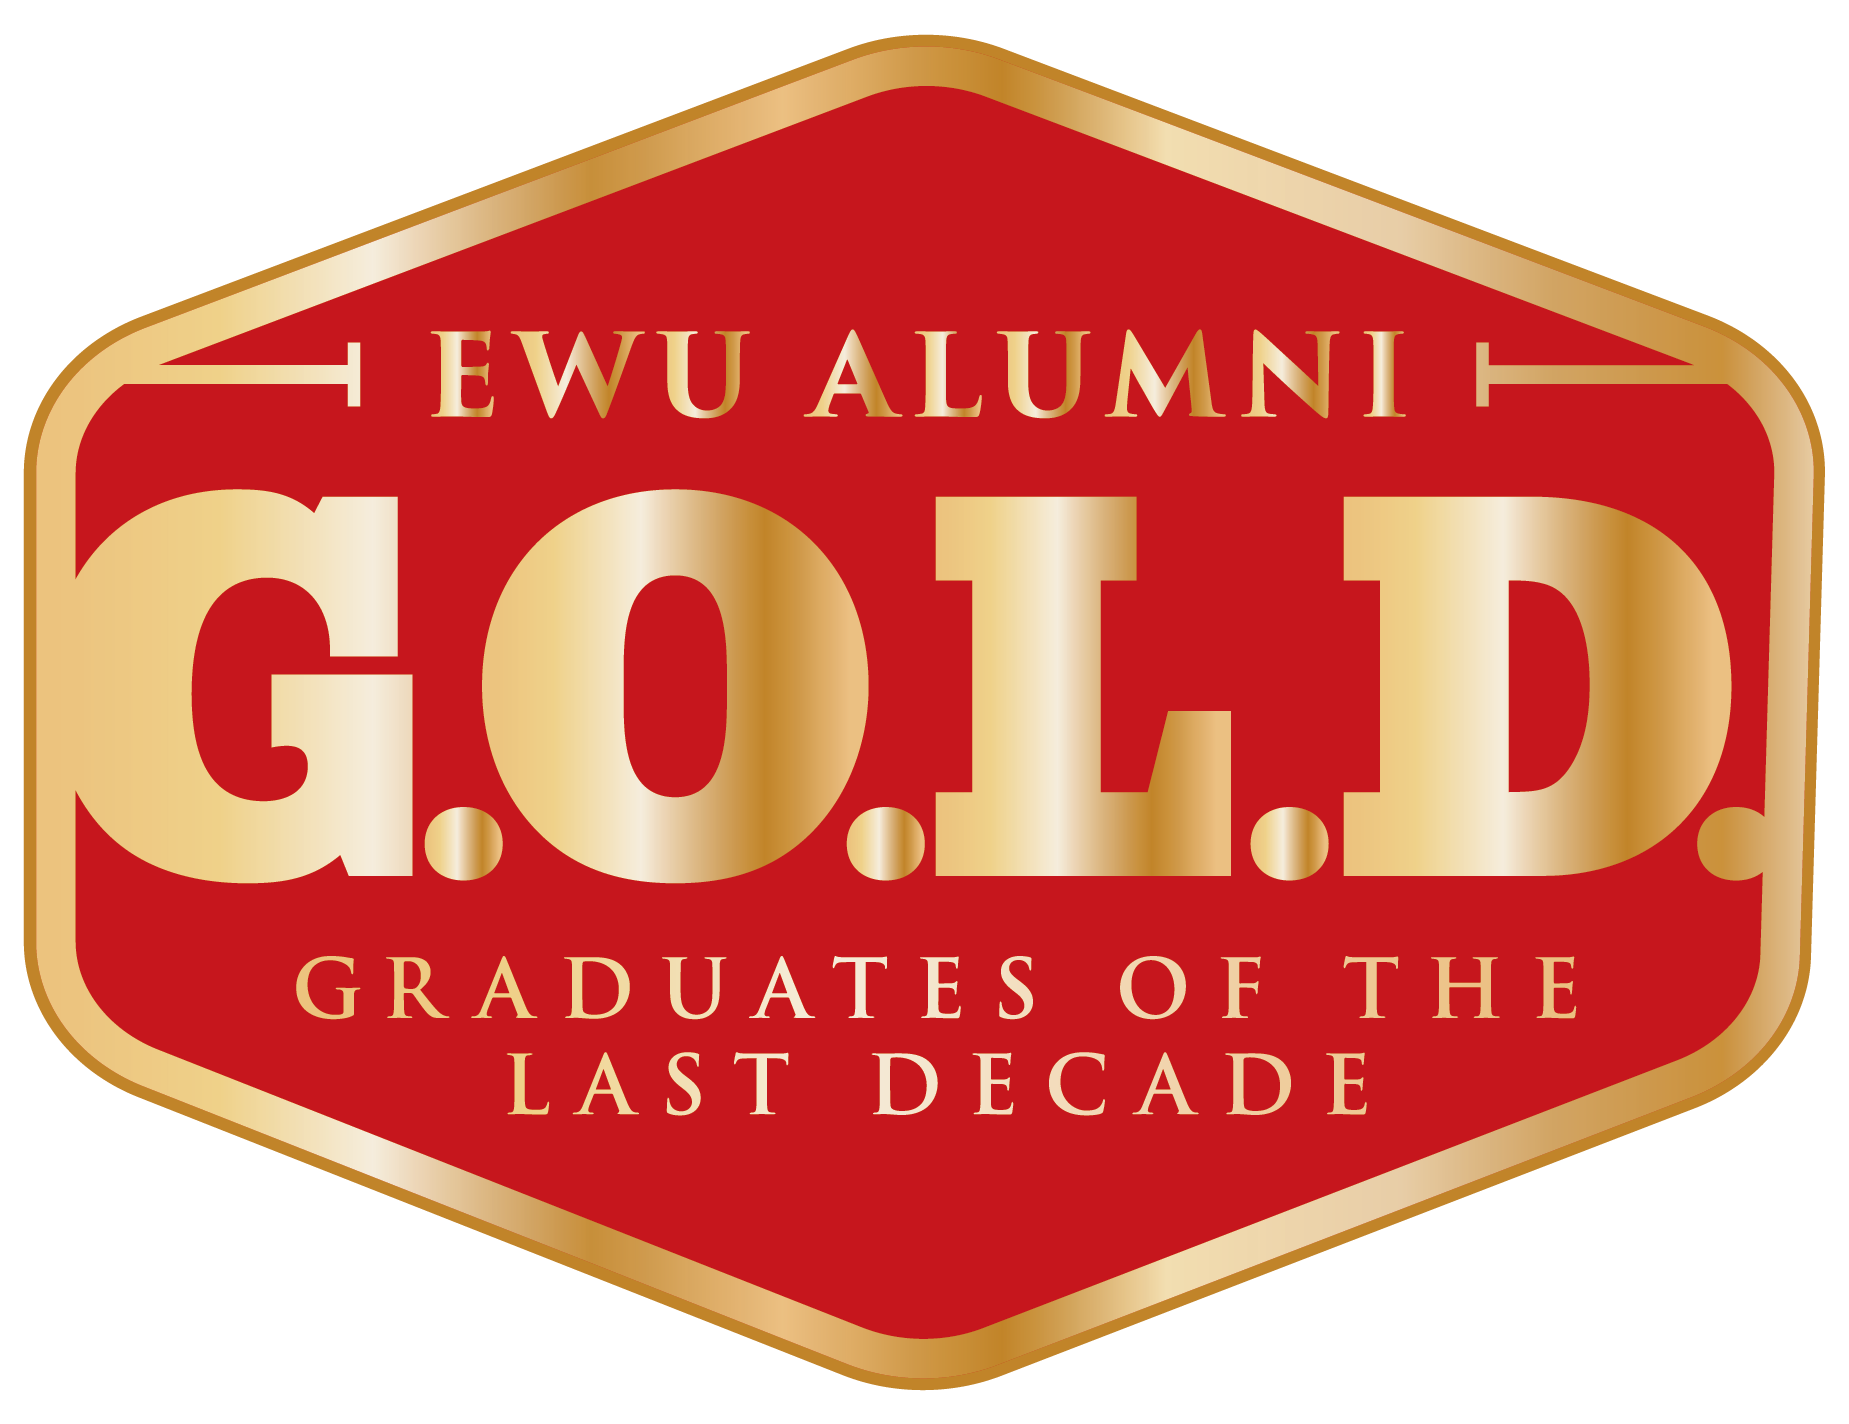 ewu alumni gold - graduates of the last decade